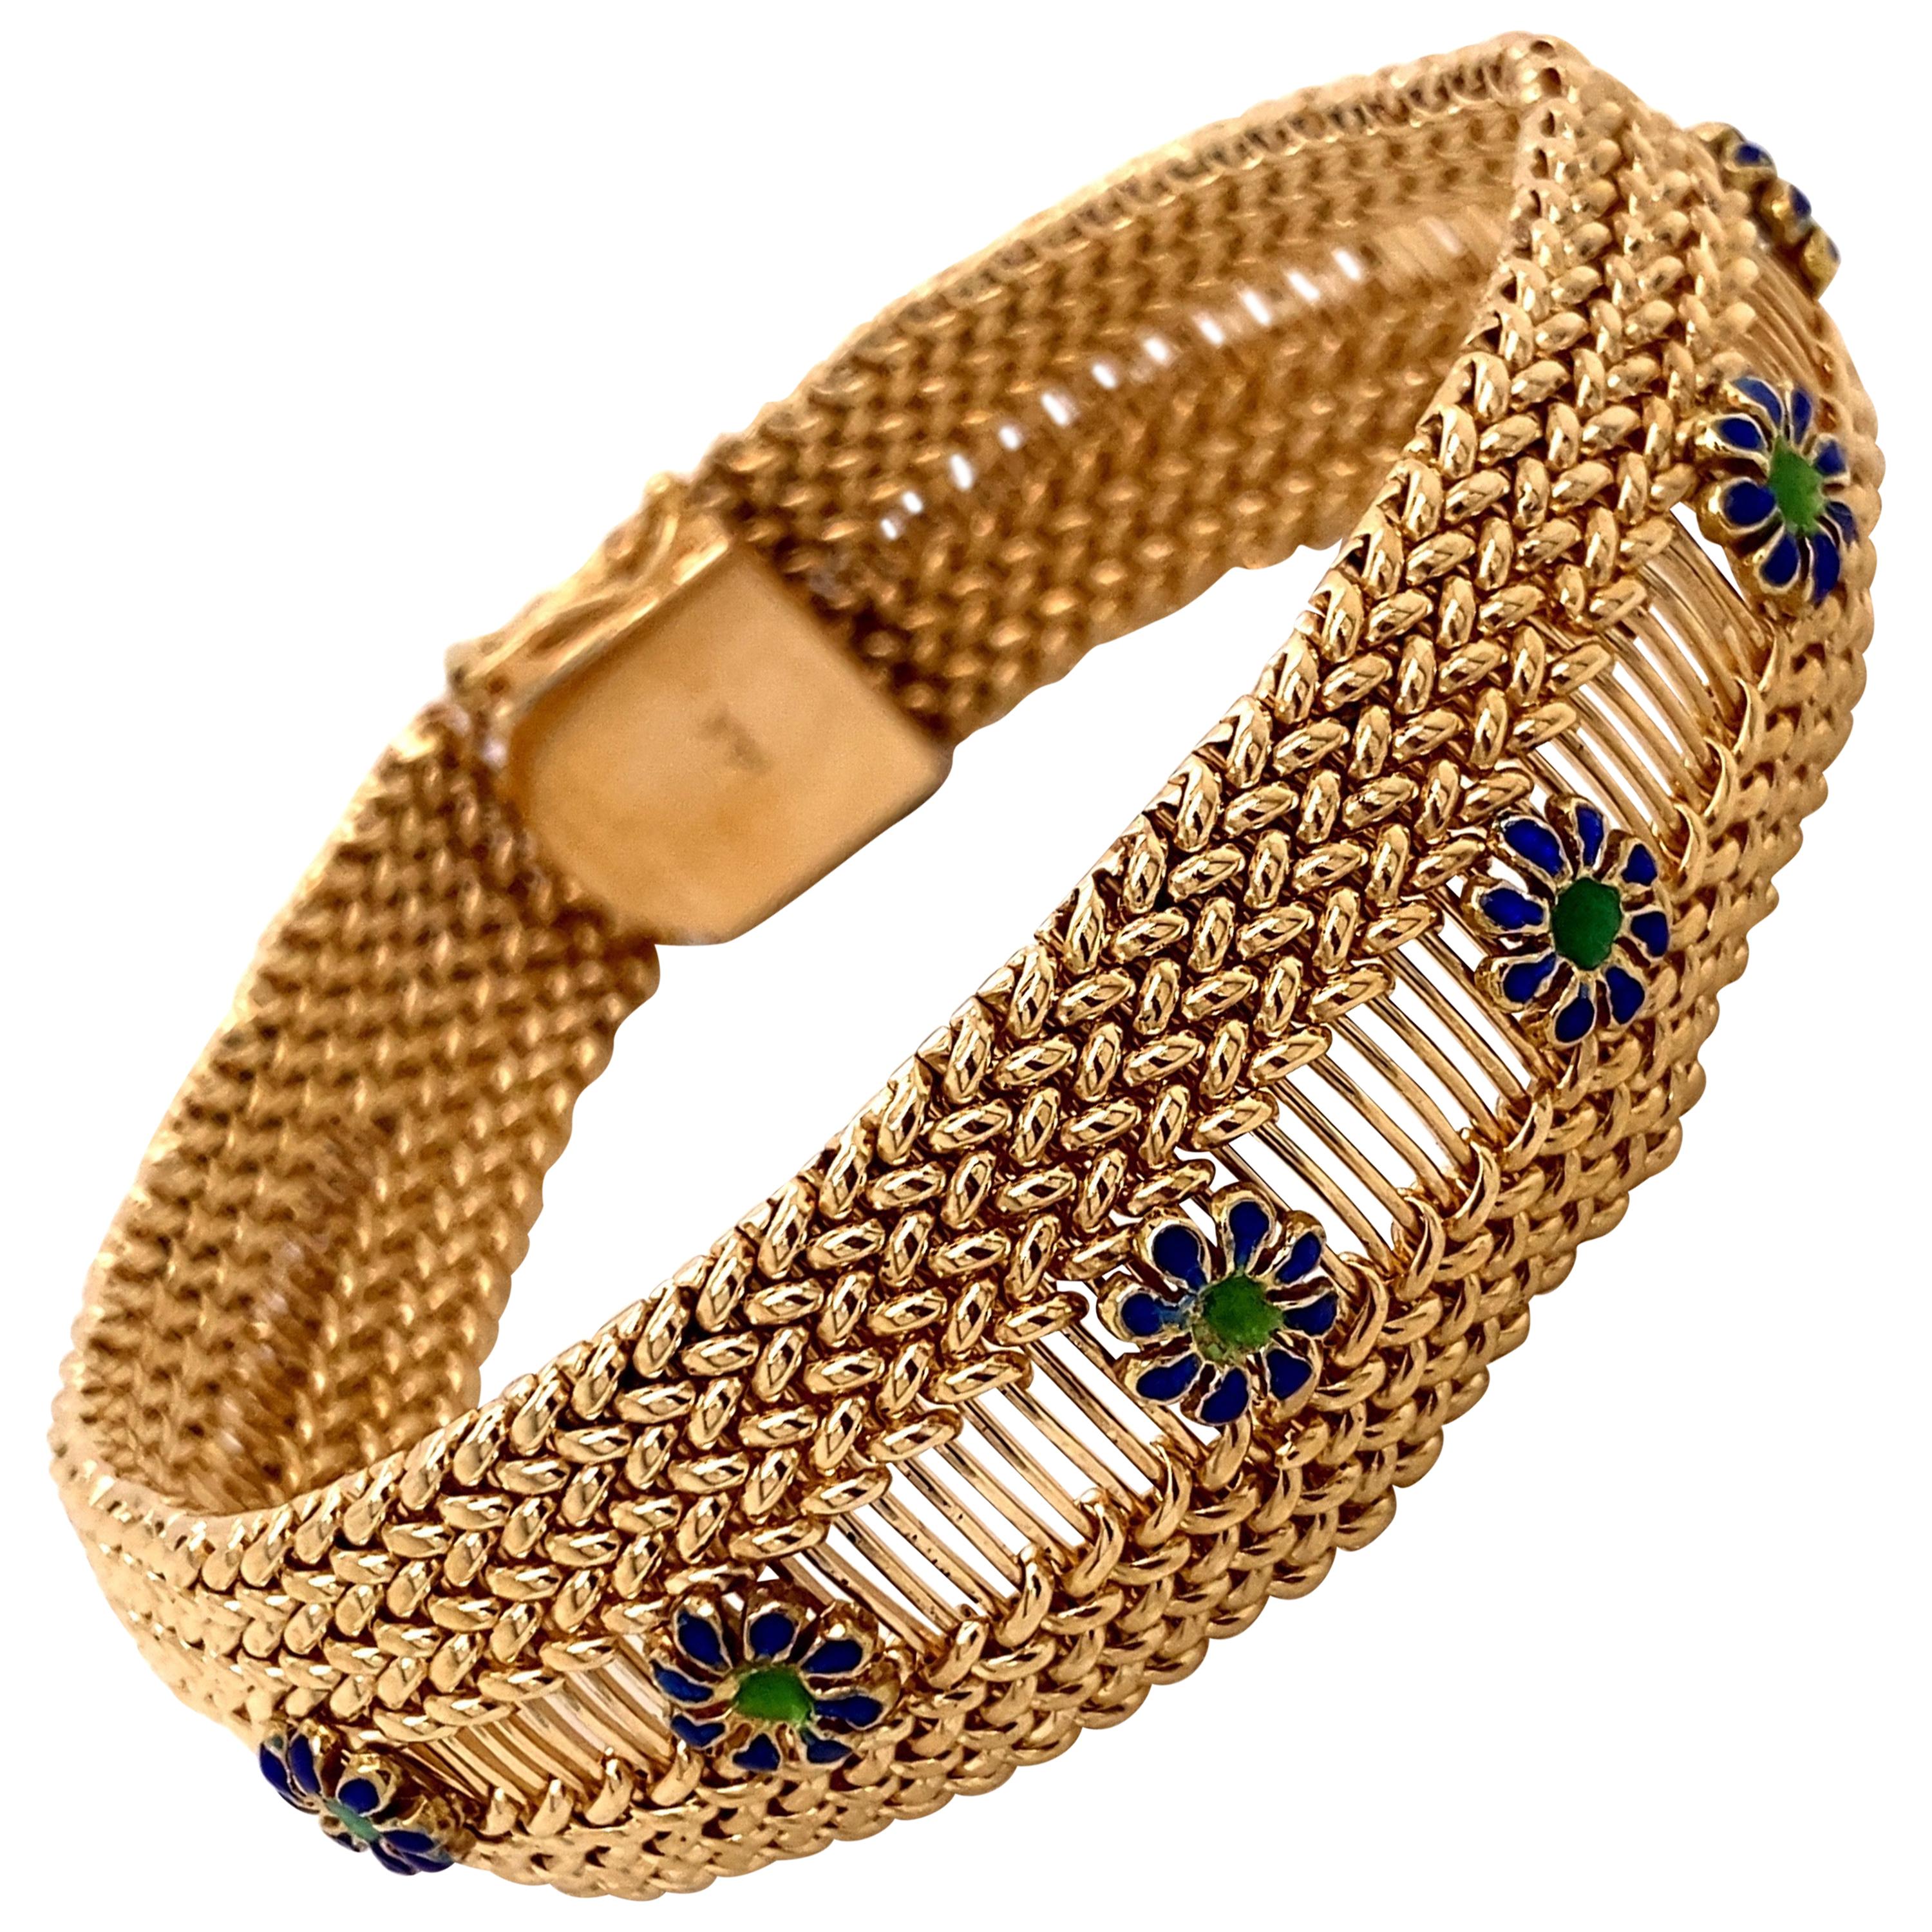 Vintage 1960s 14 Karat Yellow Gold Mesh Bracelet with Enamel Flowers